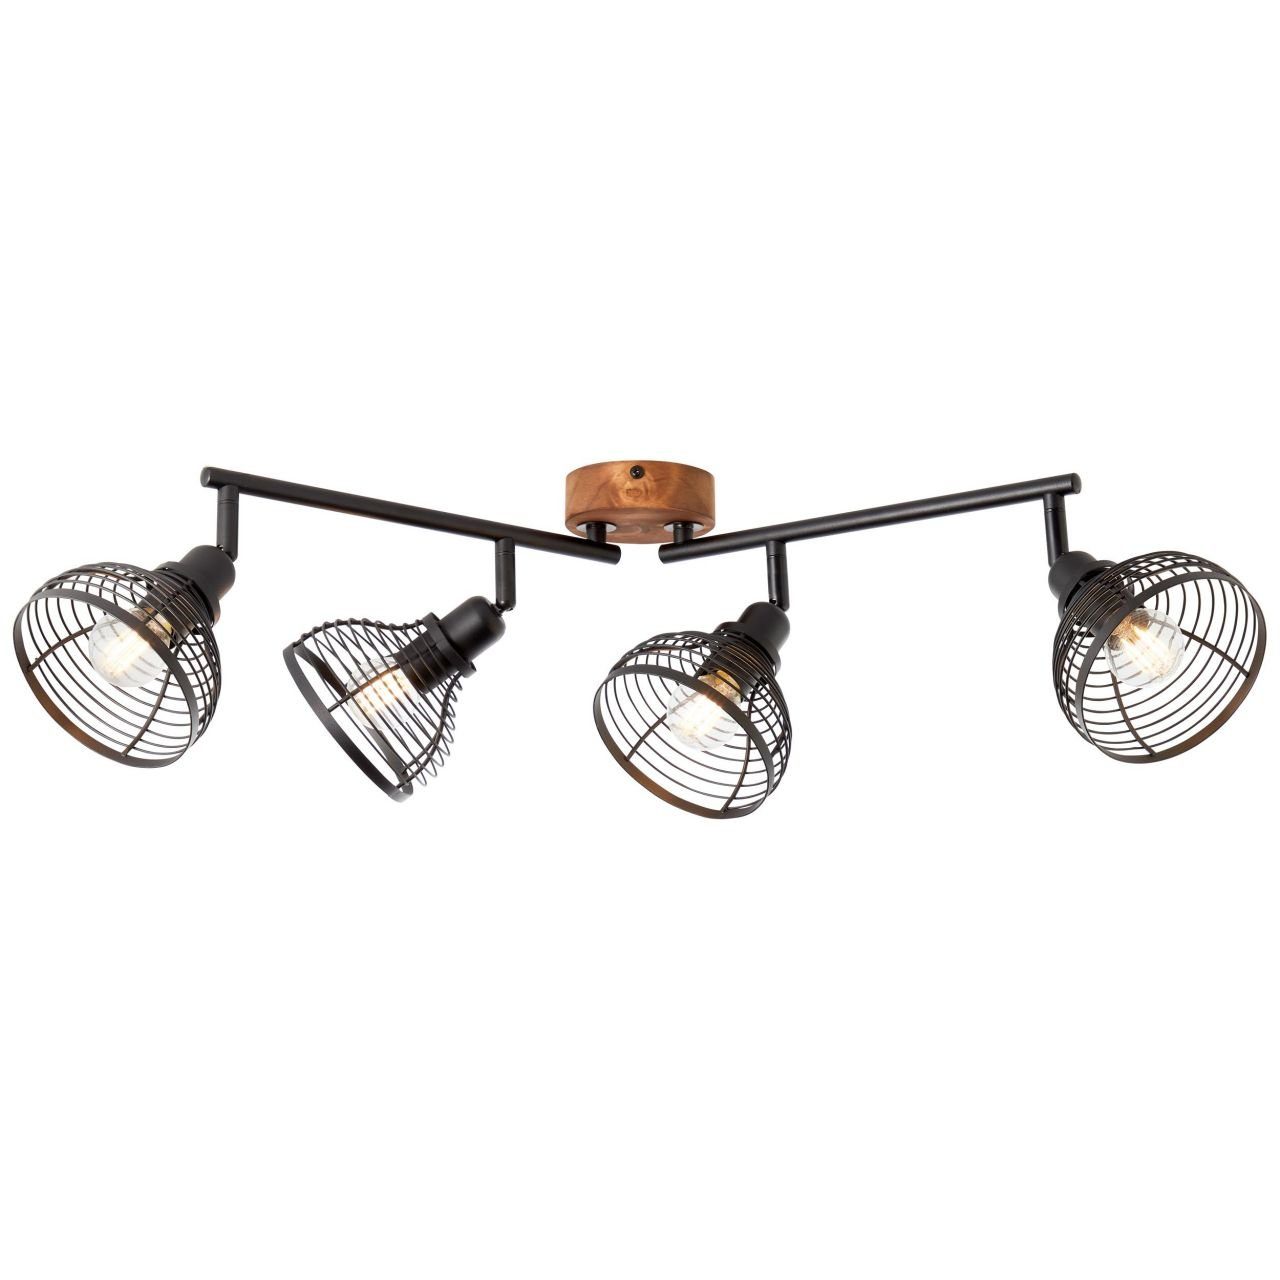 E1 4x Brilliant Lampe, Deckenleuchte Avia D45, Metall/Holz, Spotrohr Avia, schwarz/holzfarbend, 4flg